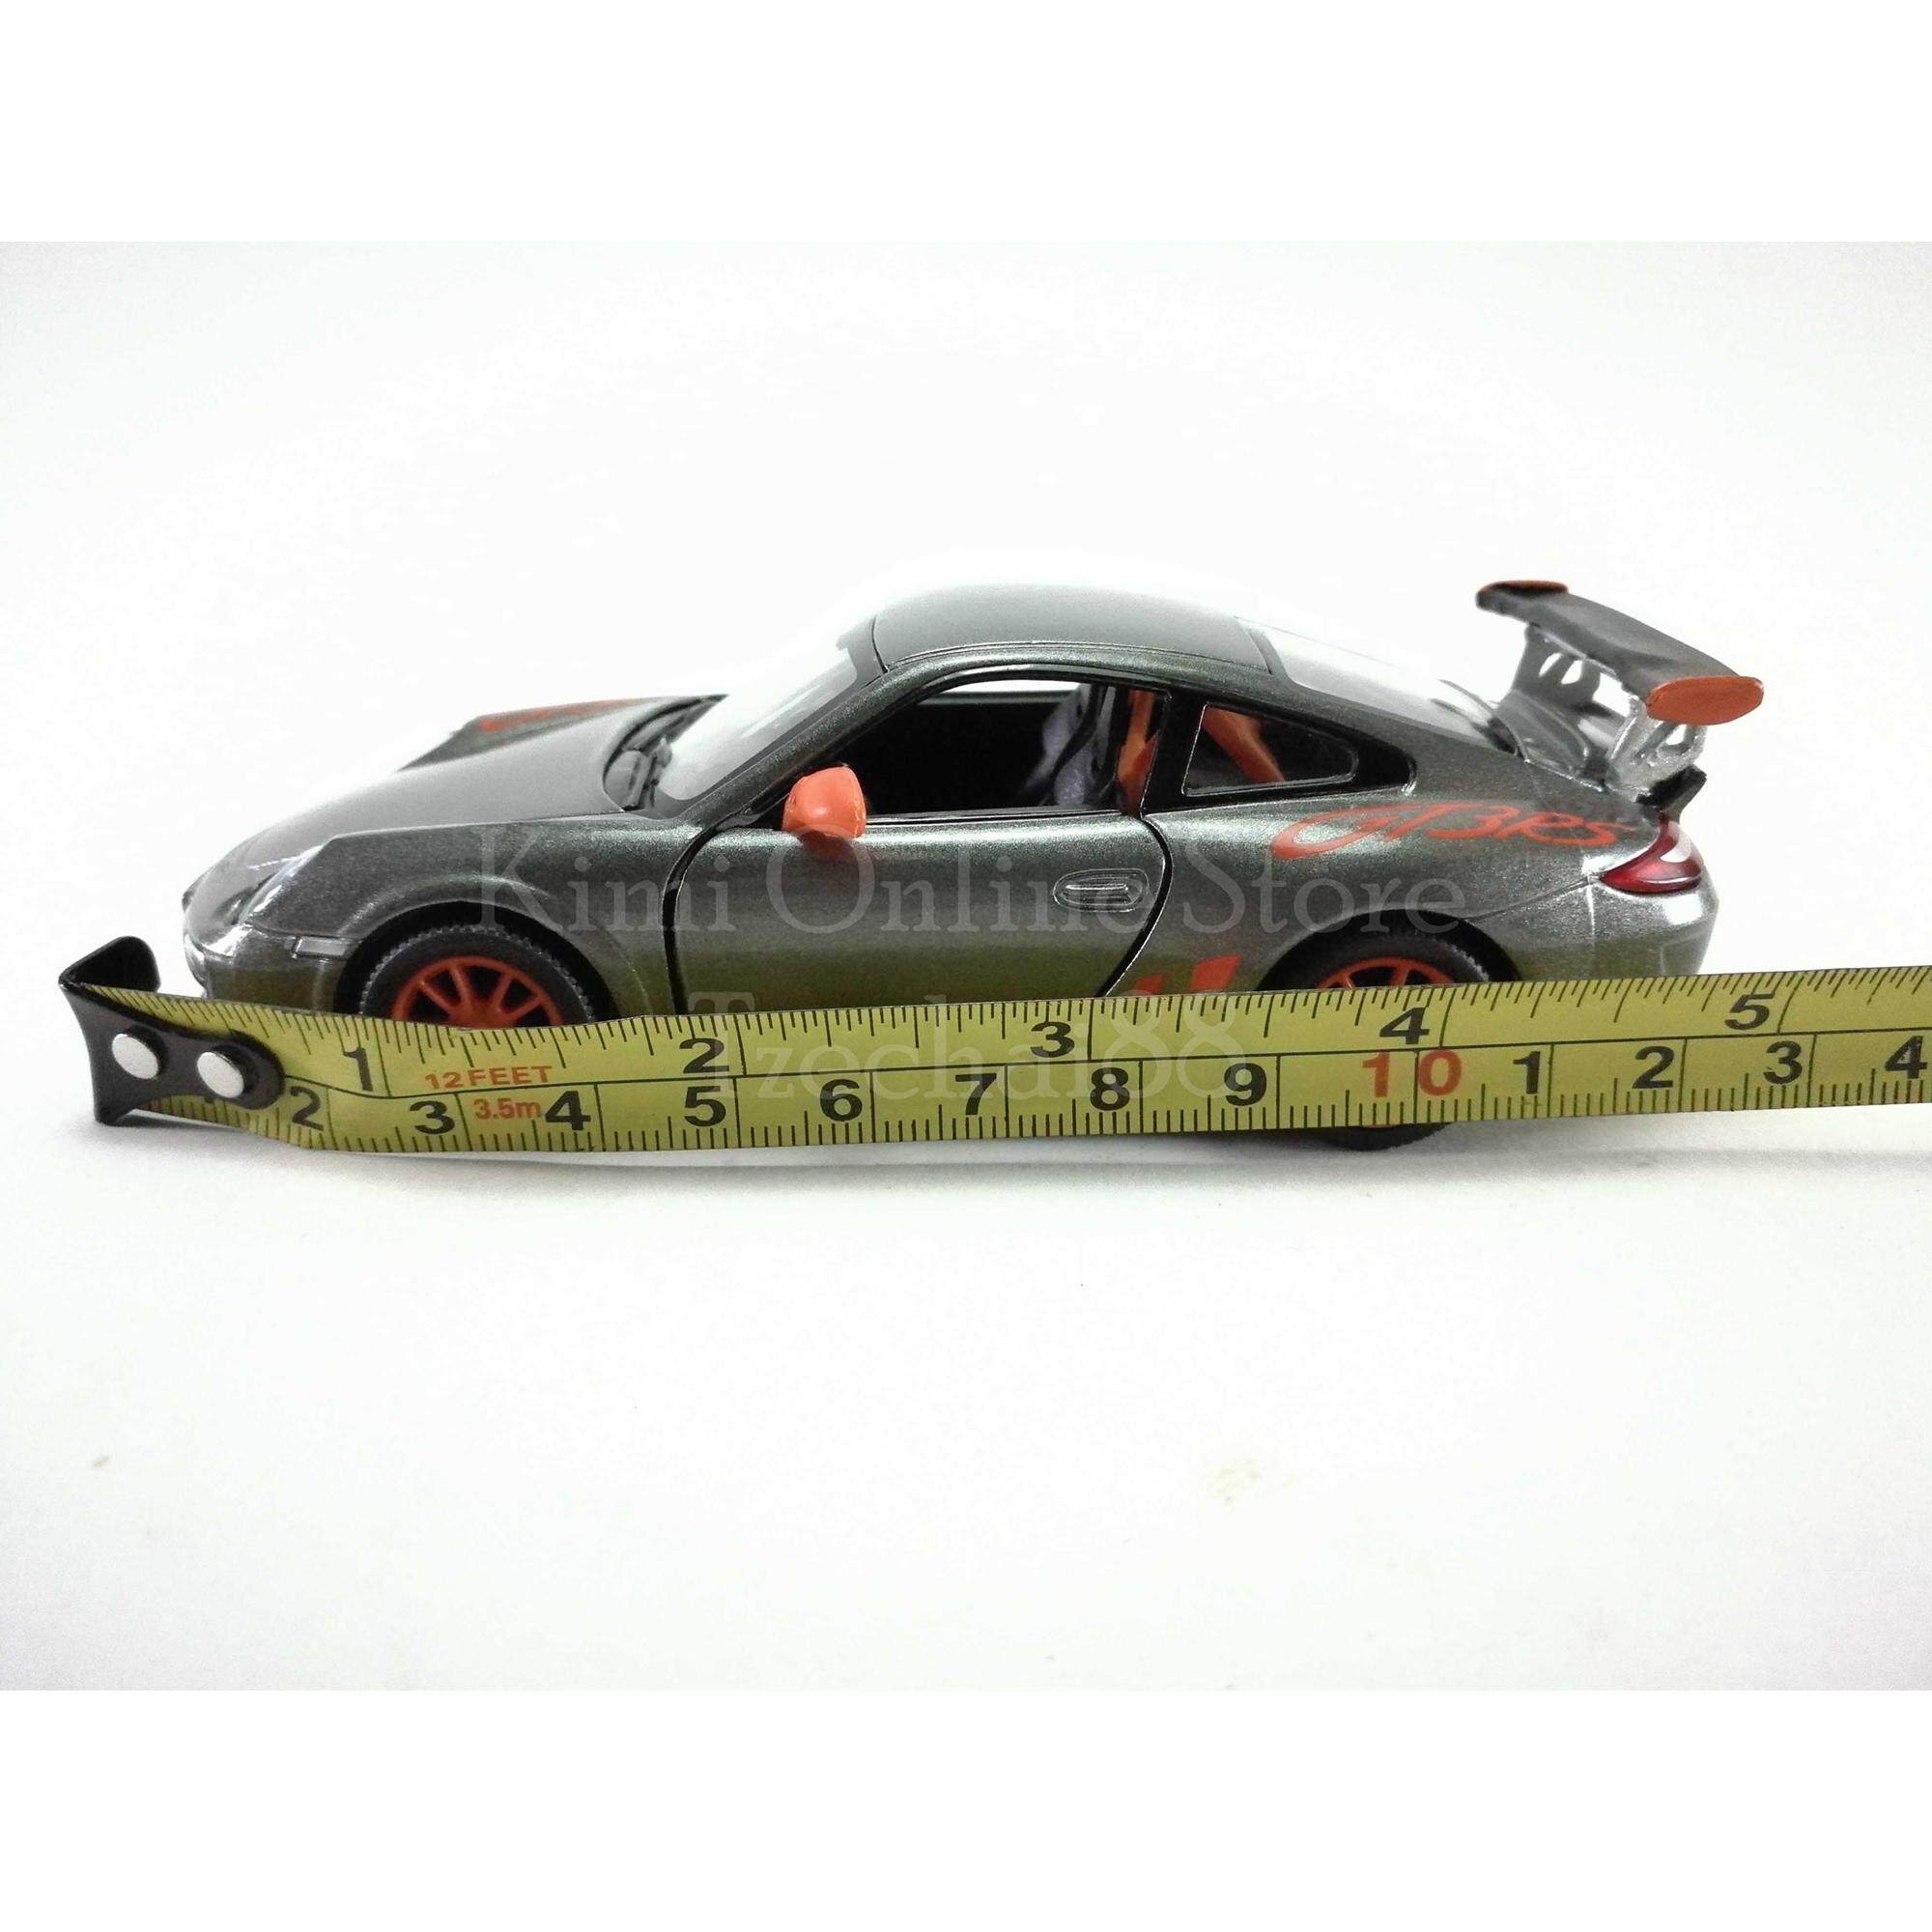 Kinsmart Die-cast 1:36 Porsche 911 GT3 RS Car Model with Box Collection